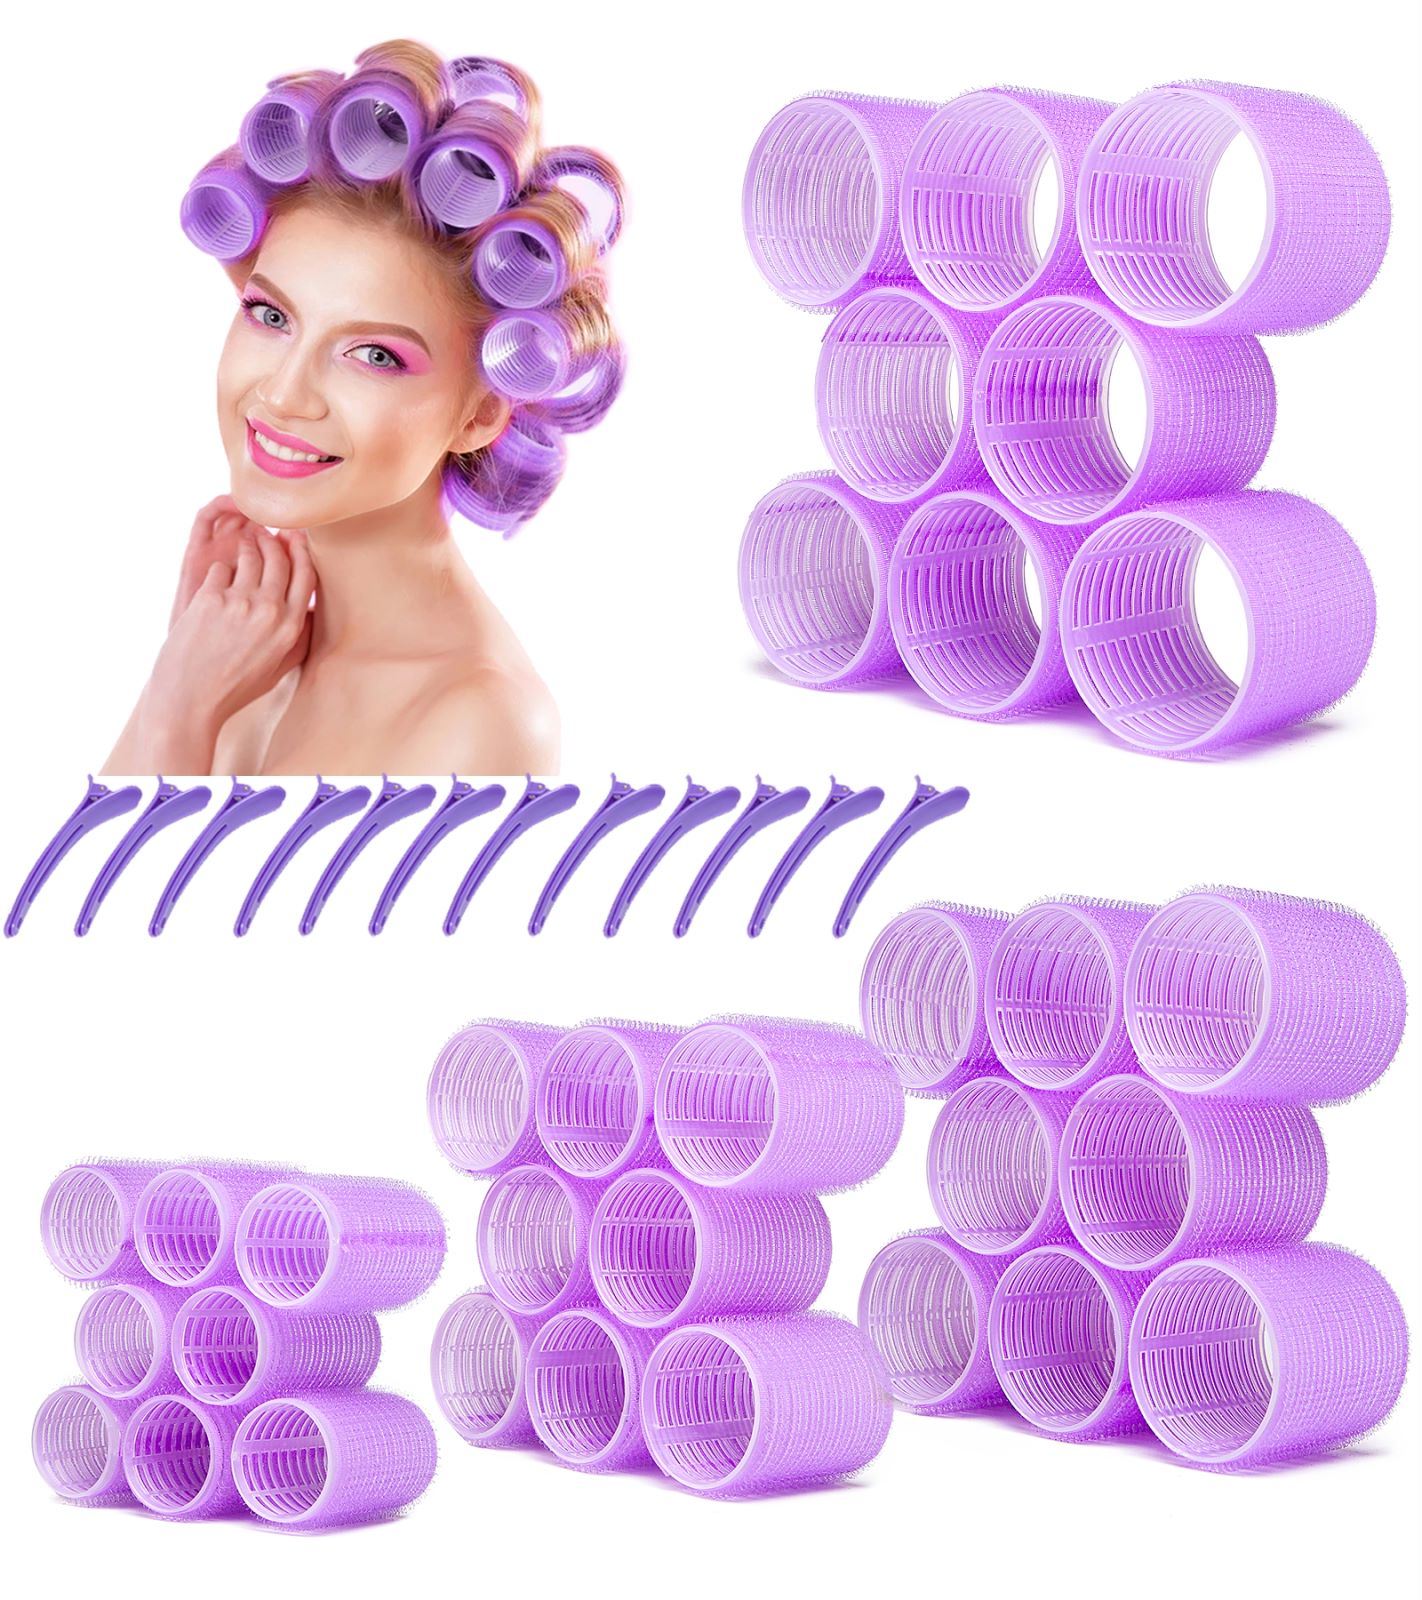 Jumbo Hair Rollers; 32 Packs Large Hair Rollers for Long Medium Short Hair; 4 Size Self Grip Hair Rollers for Women Curls at Home (8×Extra Jumbo +8×Jumbo +8×Large +8×Medium)